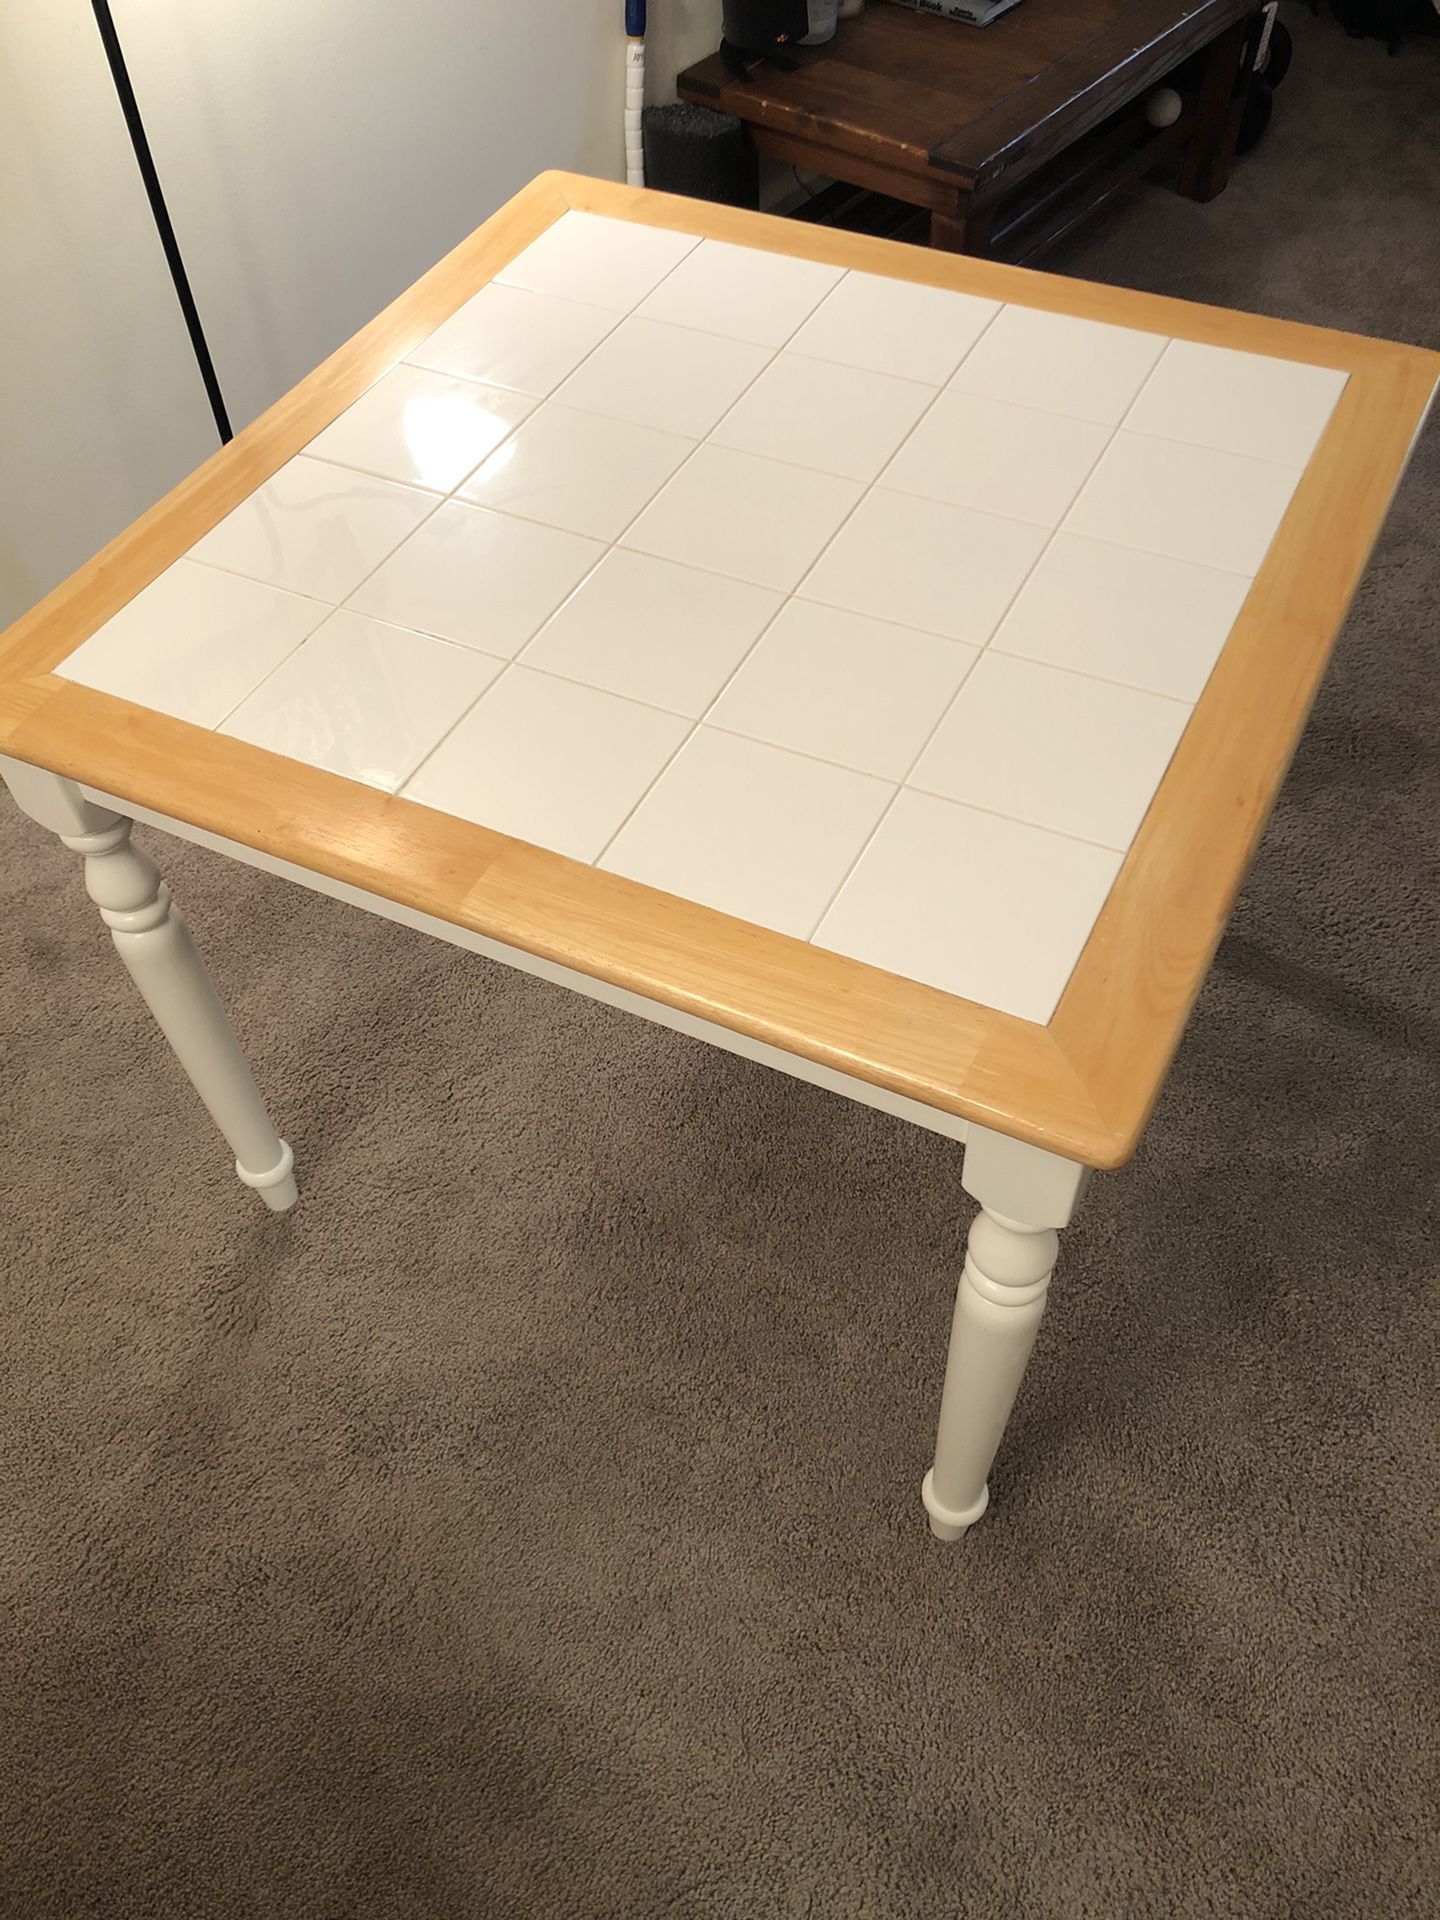 Square White Tiled Kitchen Table